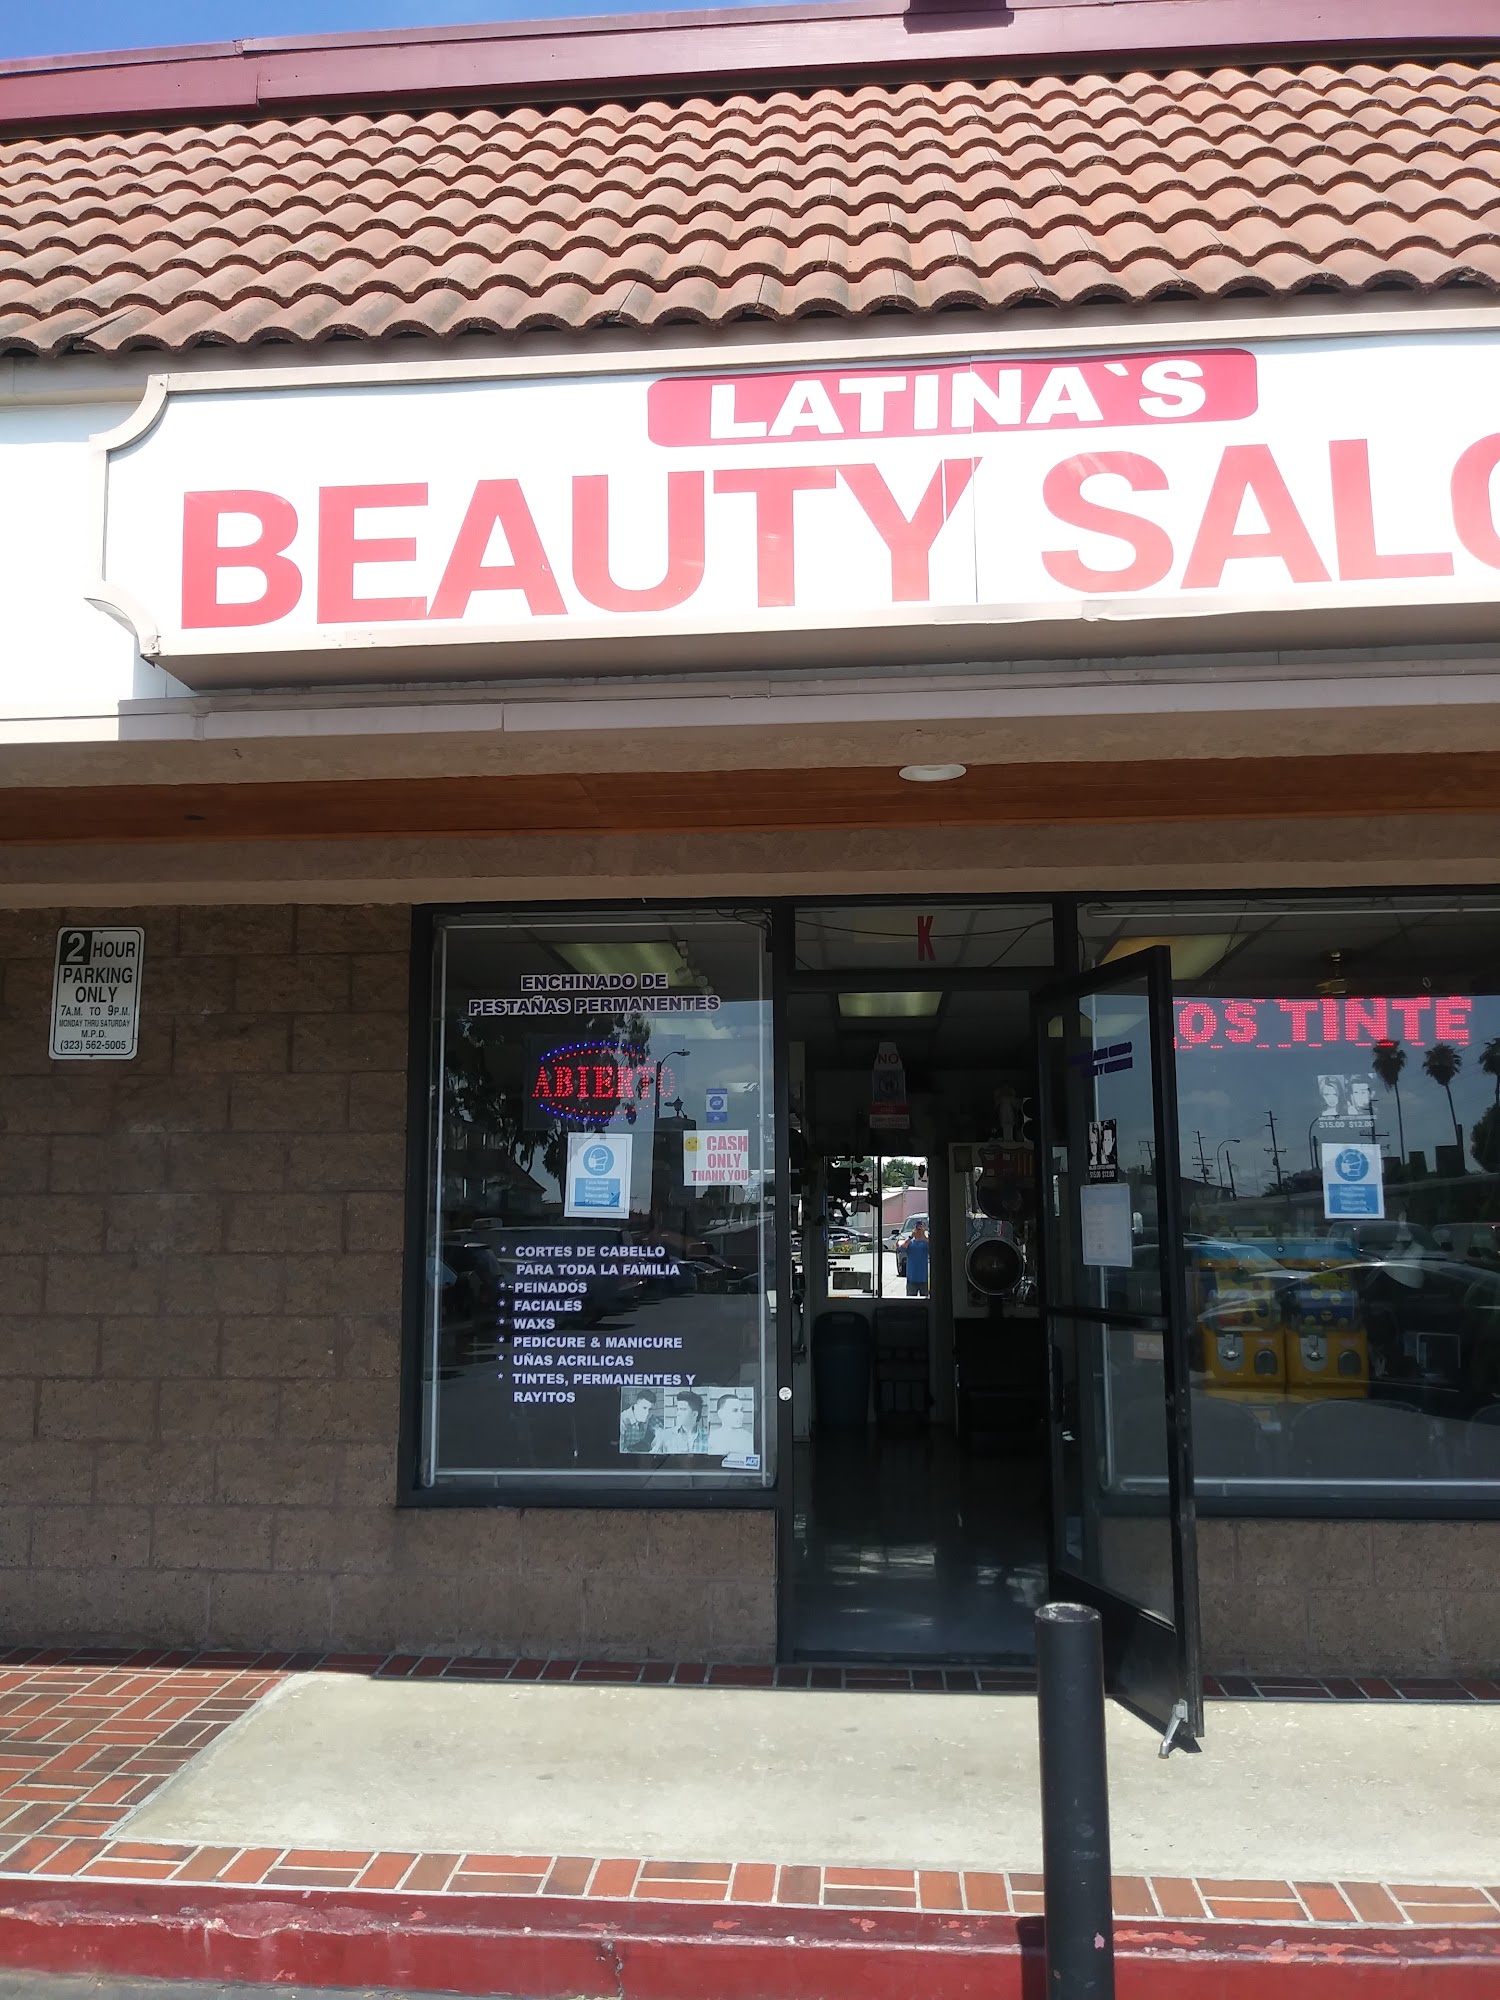 Latinas Beauty Salon 7703 Atlantic Ave, Cudahy California 90201